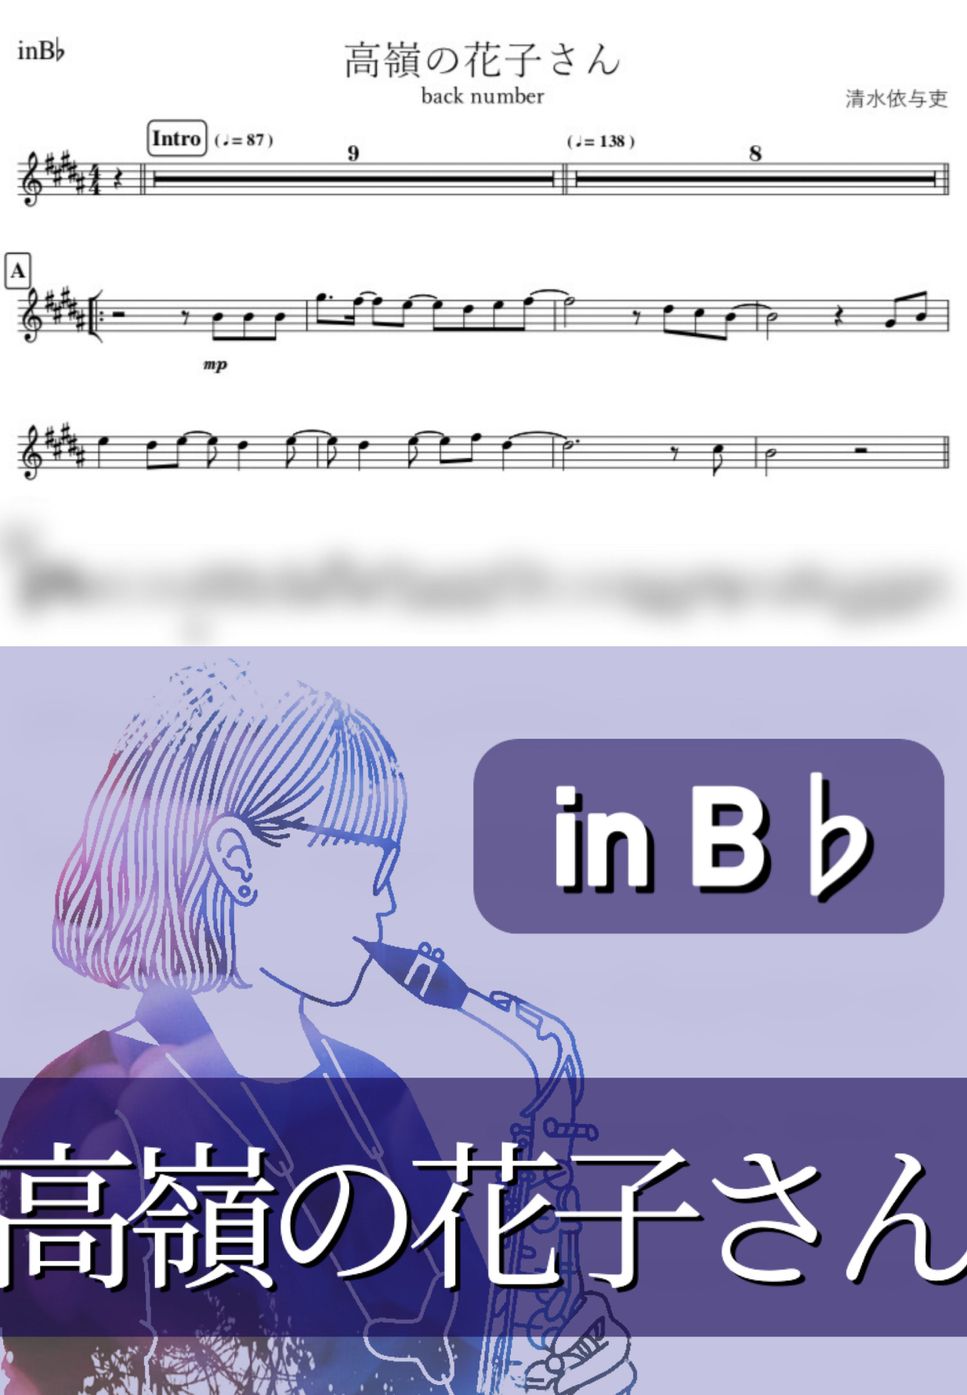 back number - 高嶺の花子さん (B♭) by kanamusic